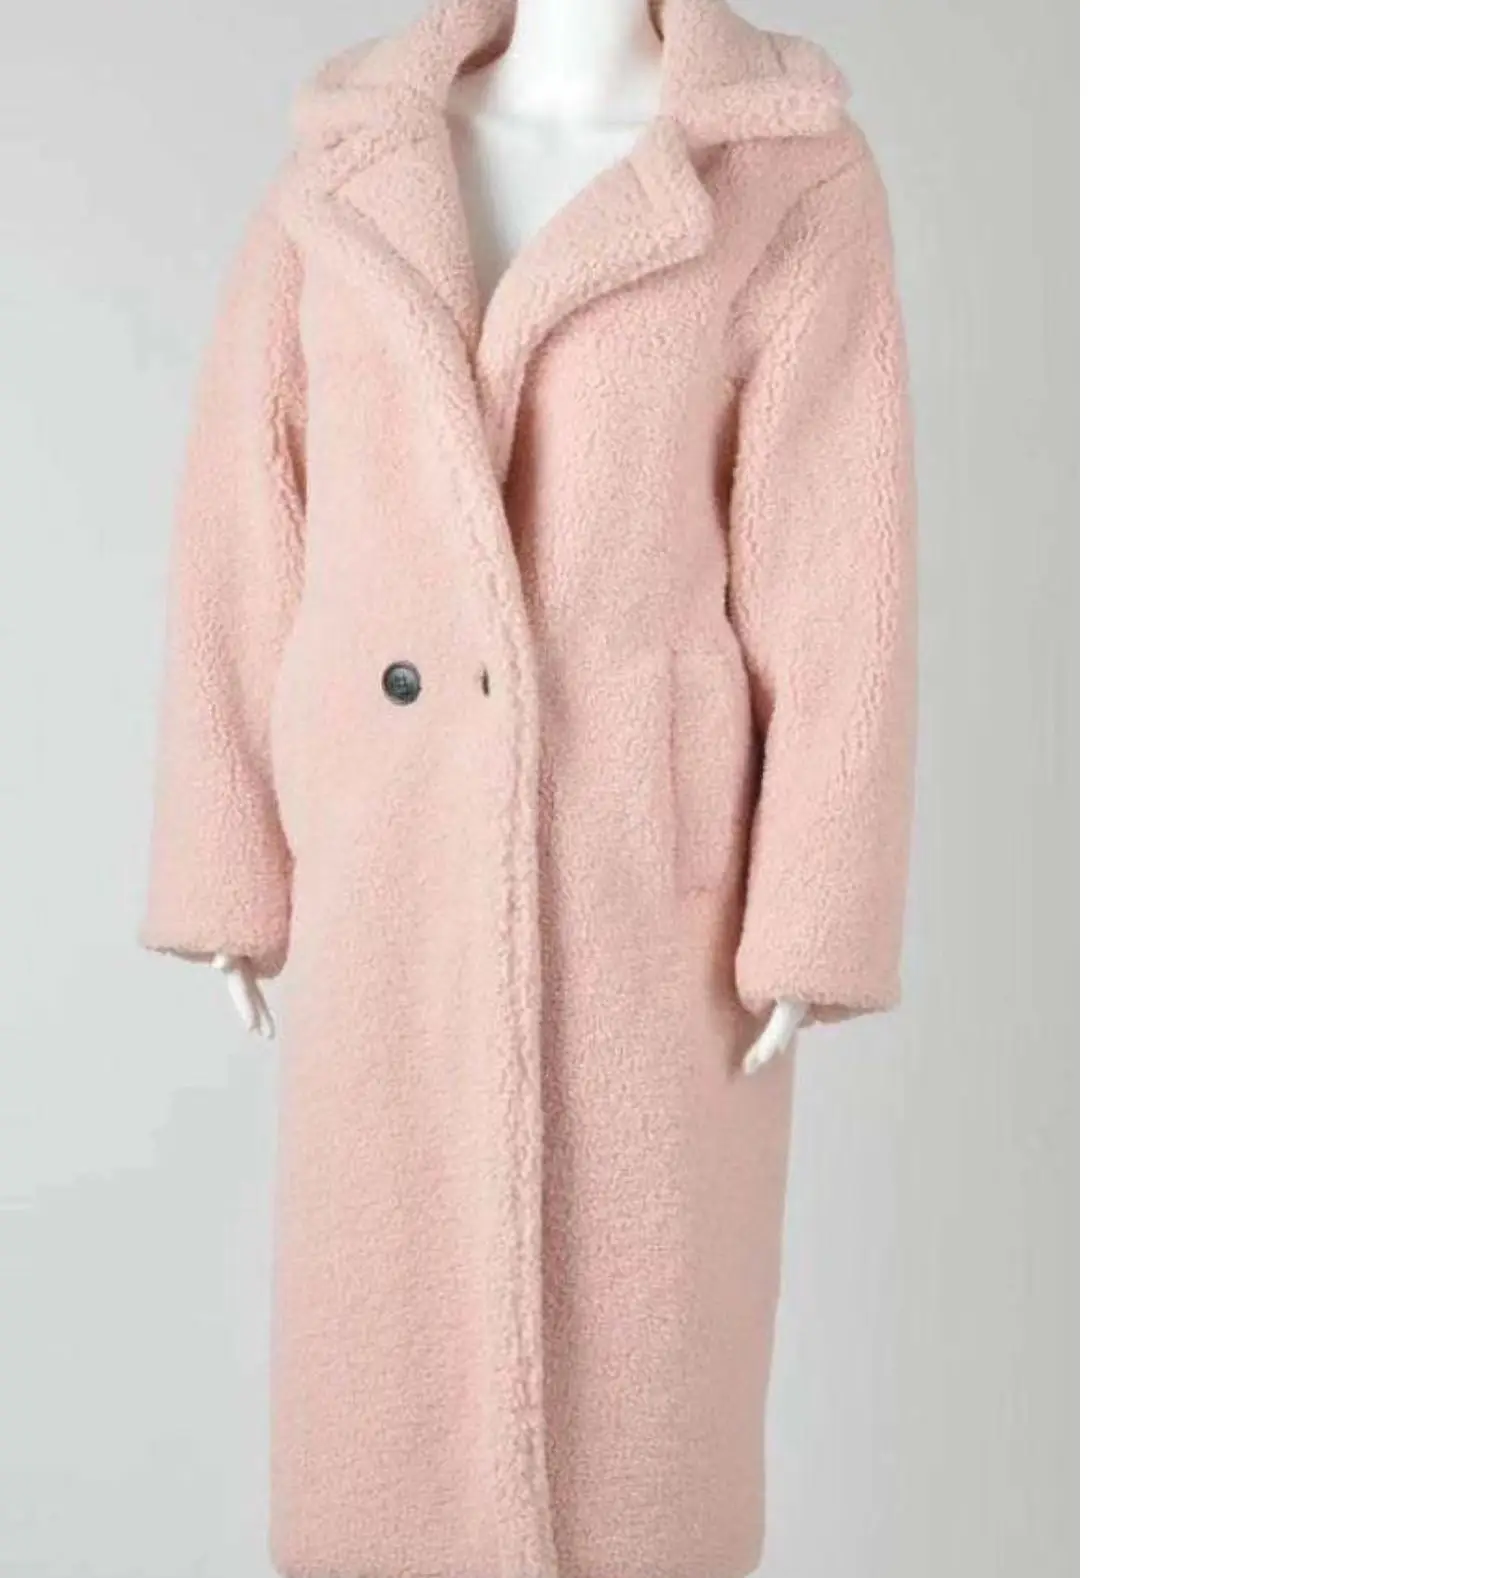 2022 Winter Vanille Farbe Pelzmantel Frauen Warmer Teddy Mantel Alpaka Woll mantel Weiche Pelz jacke Weiblicher Mantel